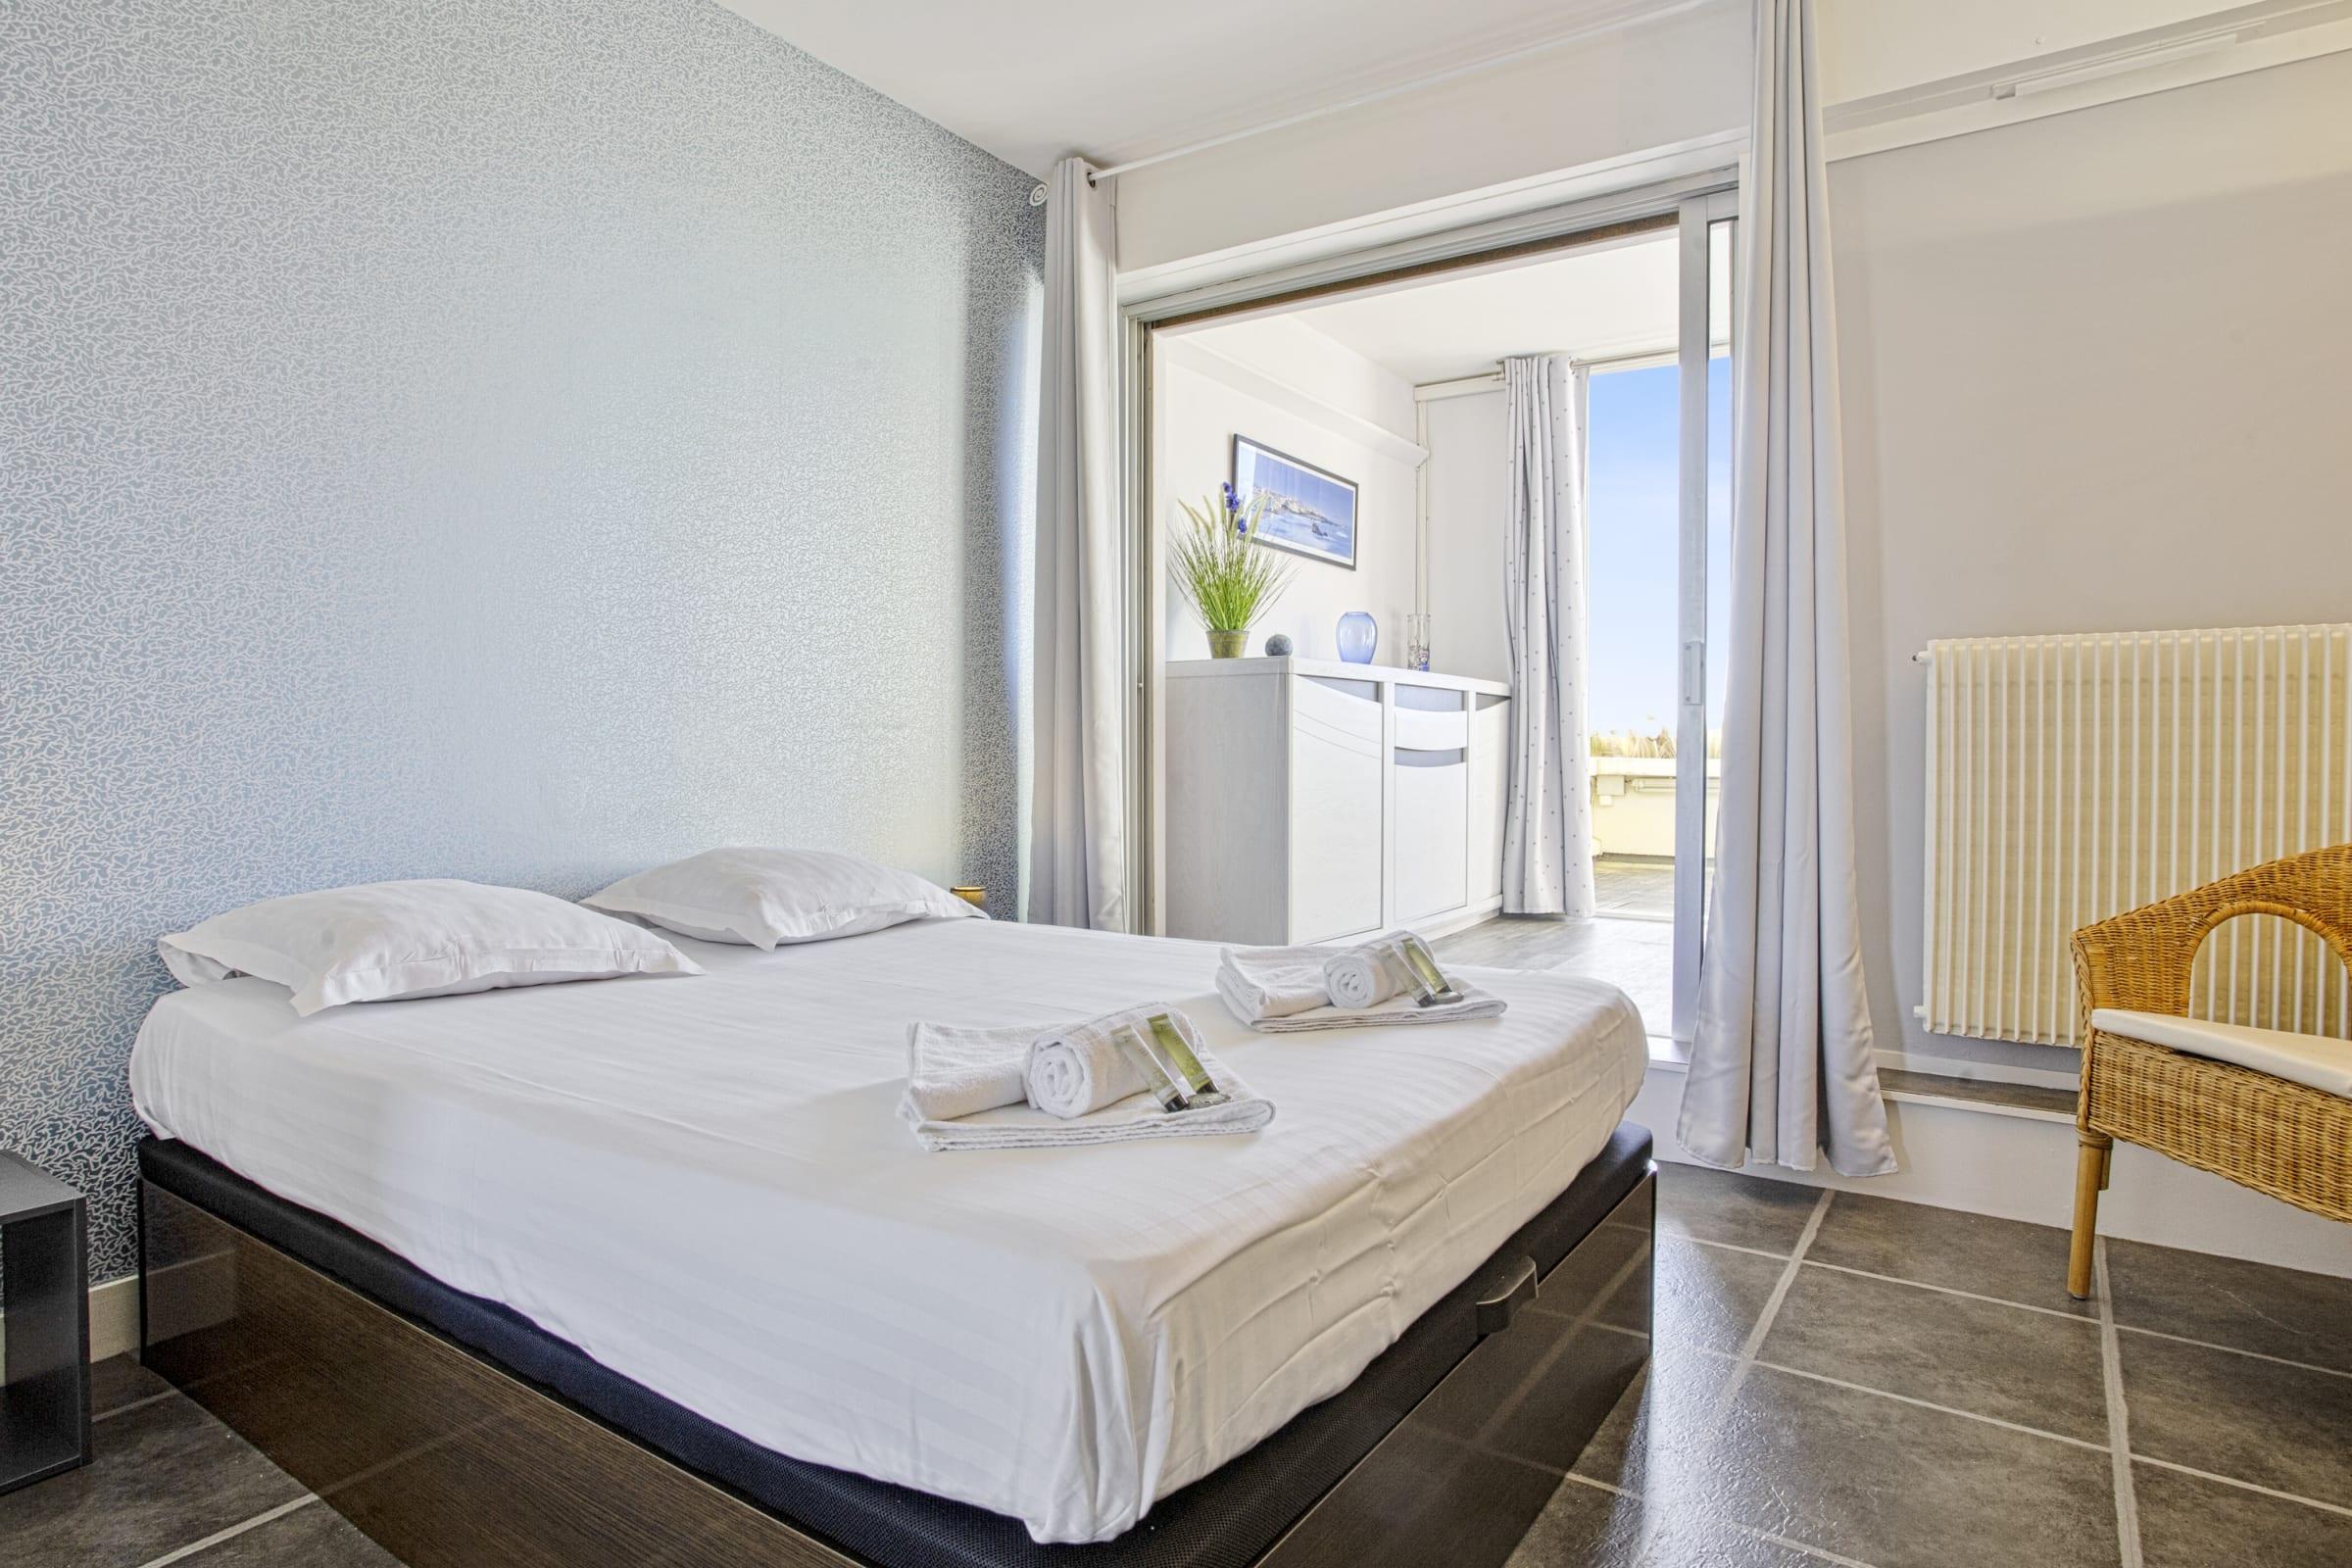 Nice 4 stars apartment with seaview - Biarritz